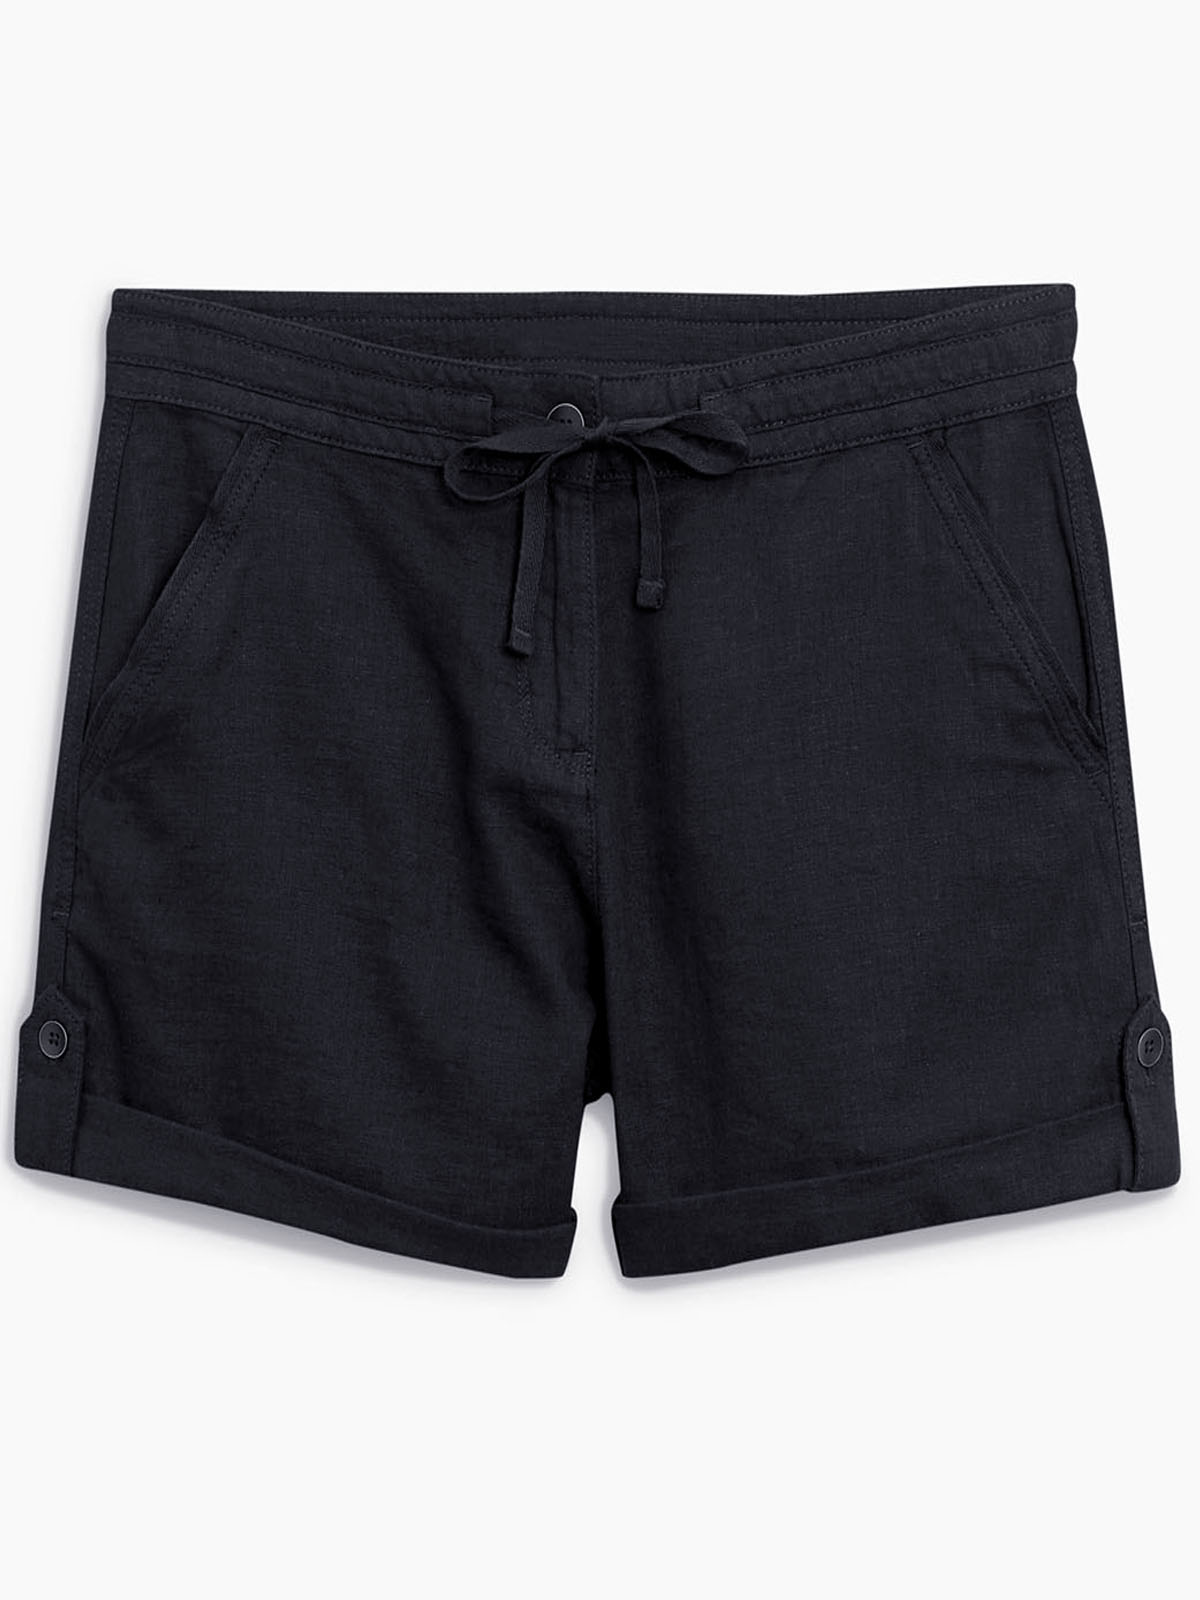 N3XT BLACK Linen Blend Drawstring Waist Shorts - Plus Size 22 to 26